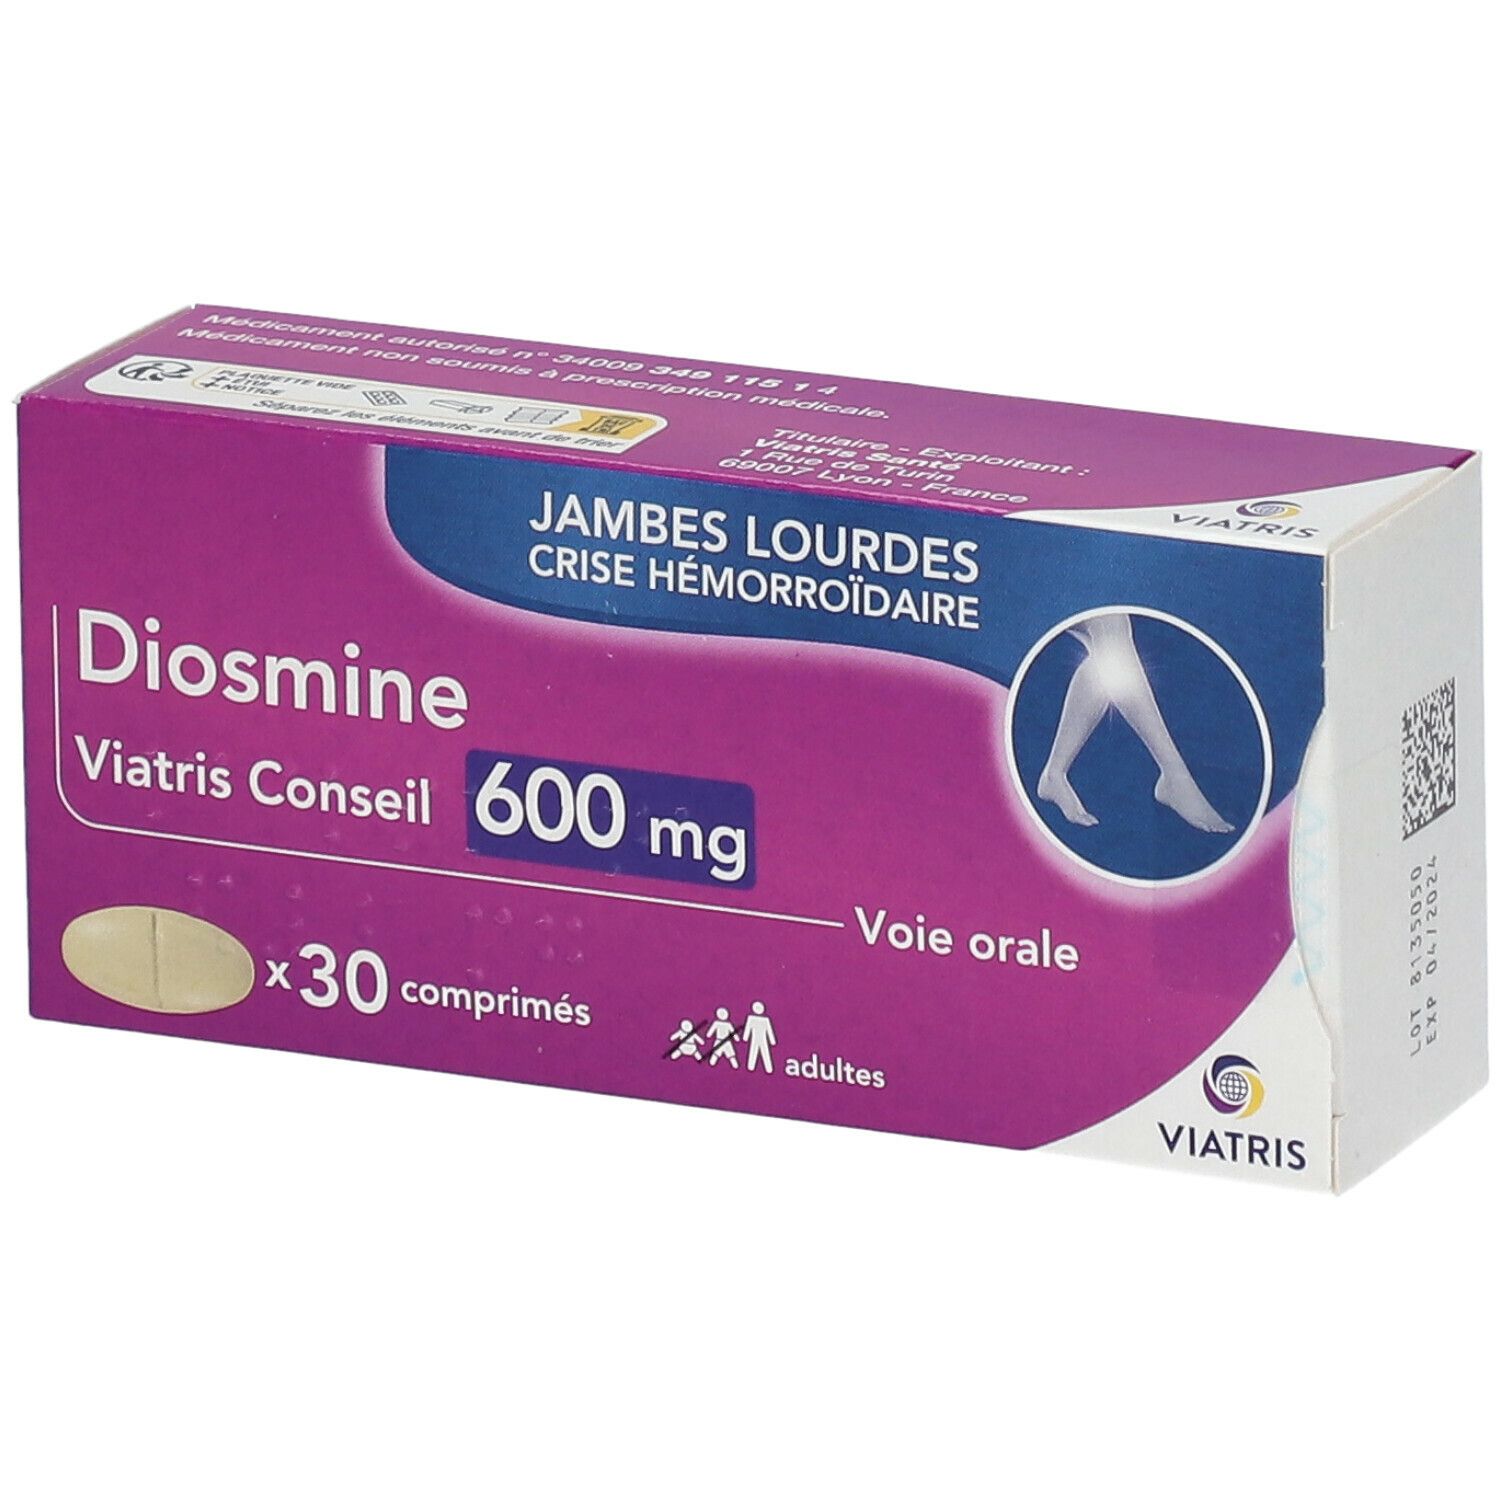 Diosmine Mylan 600 mg